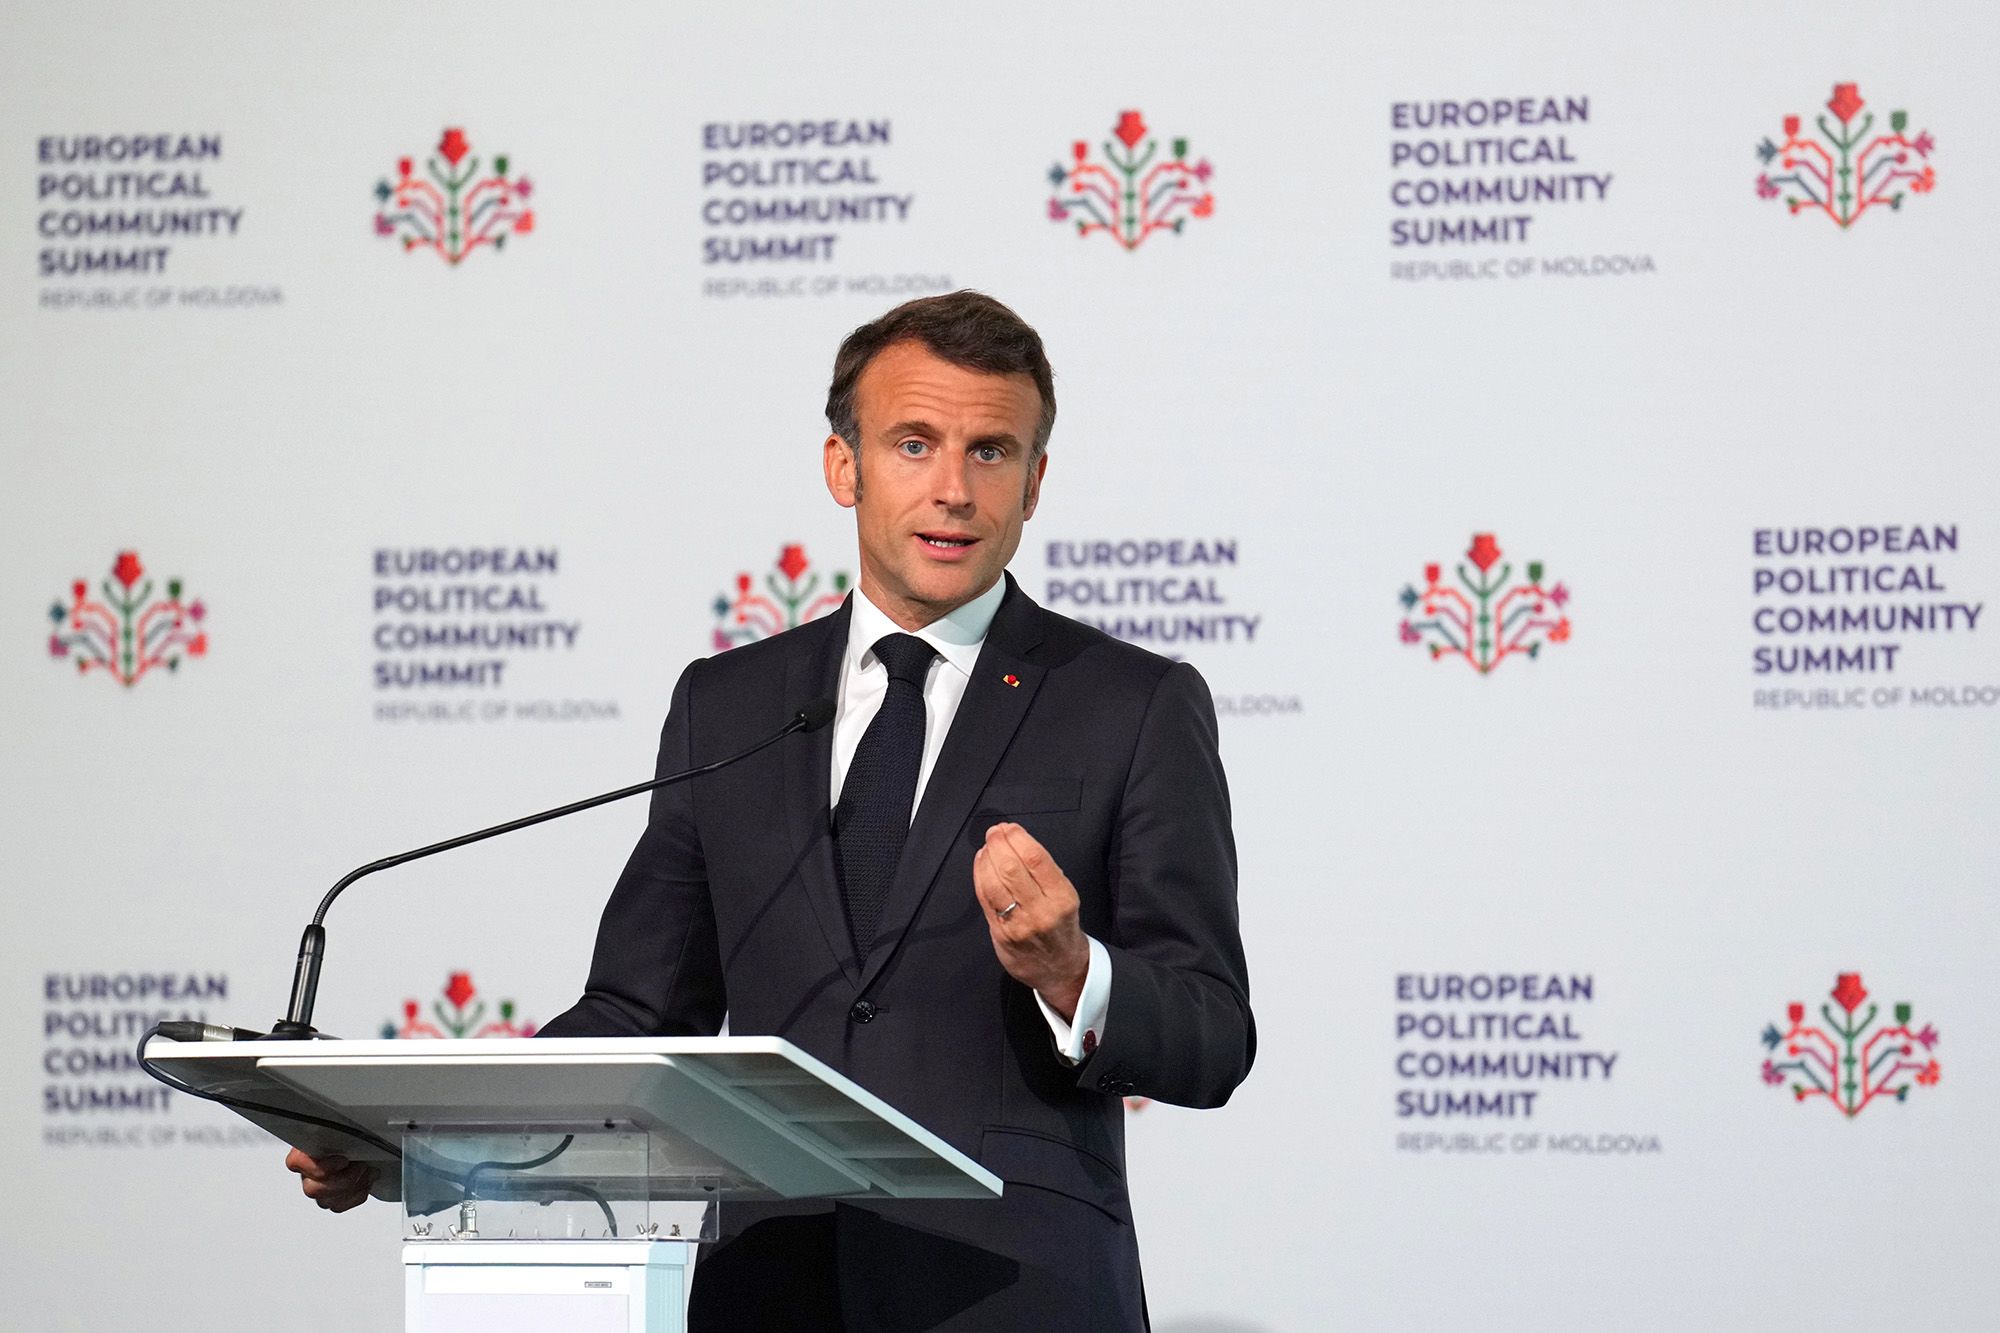 Macron: No Russian flags at Paris 2024 Olympics – POLITICO